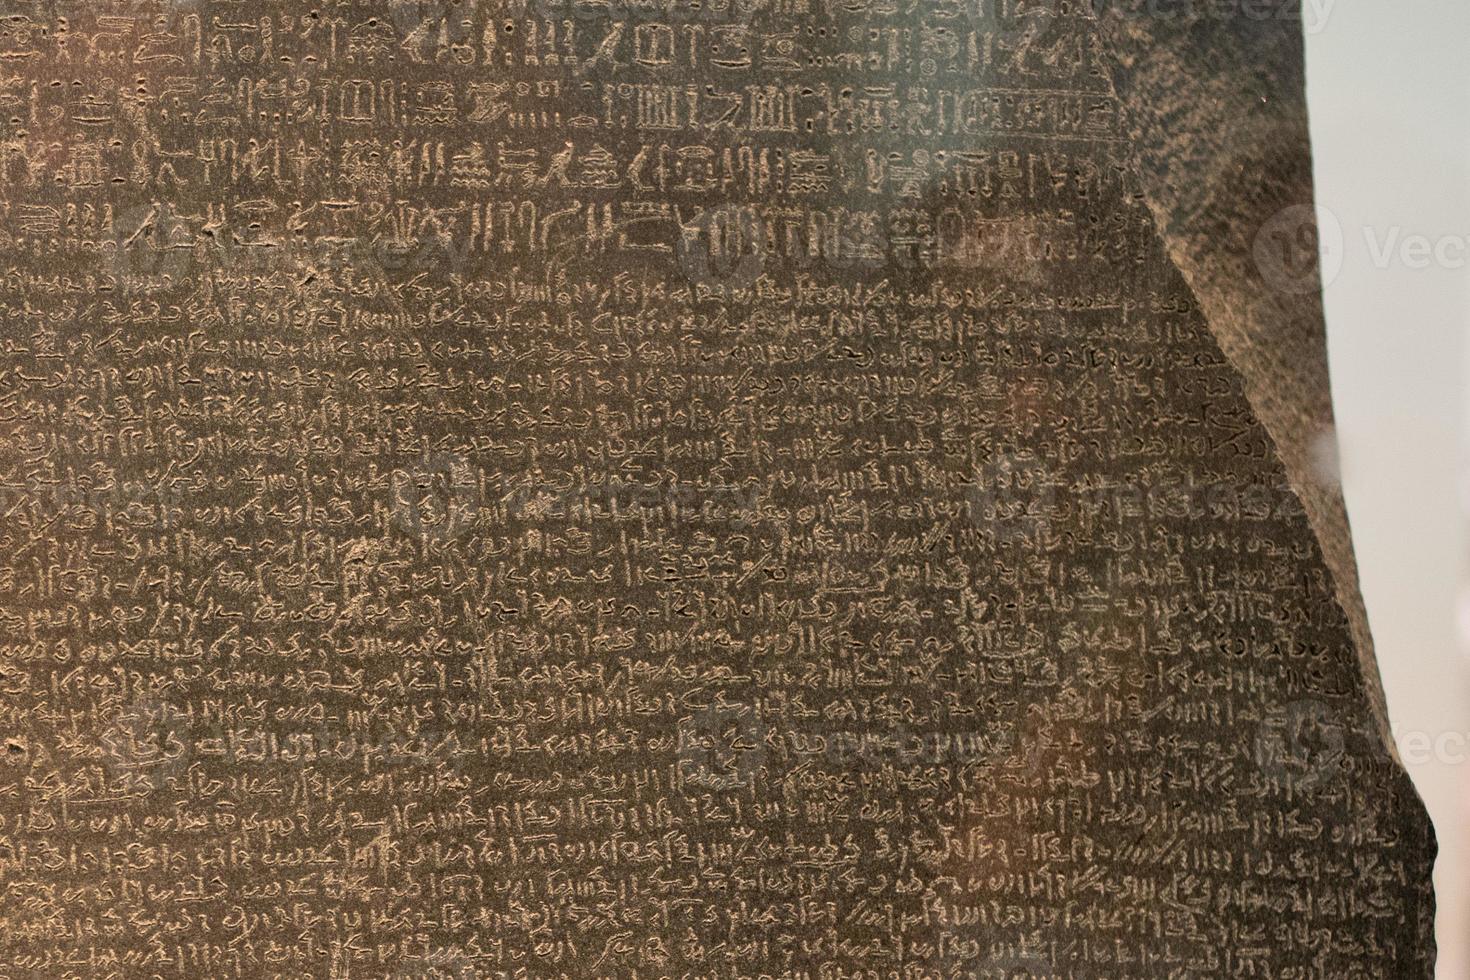 Rosetta stone three languages close up photo